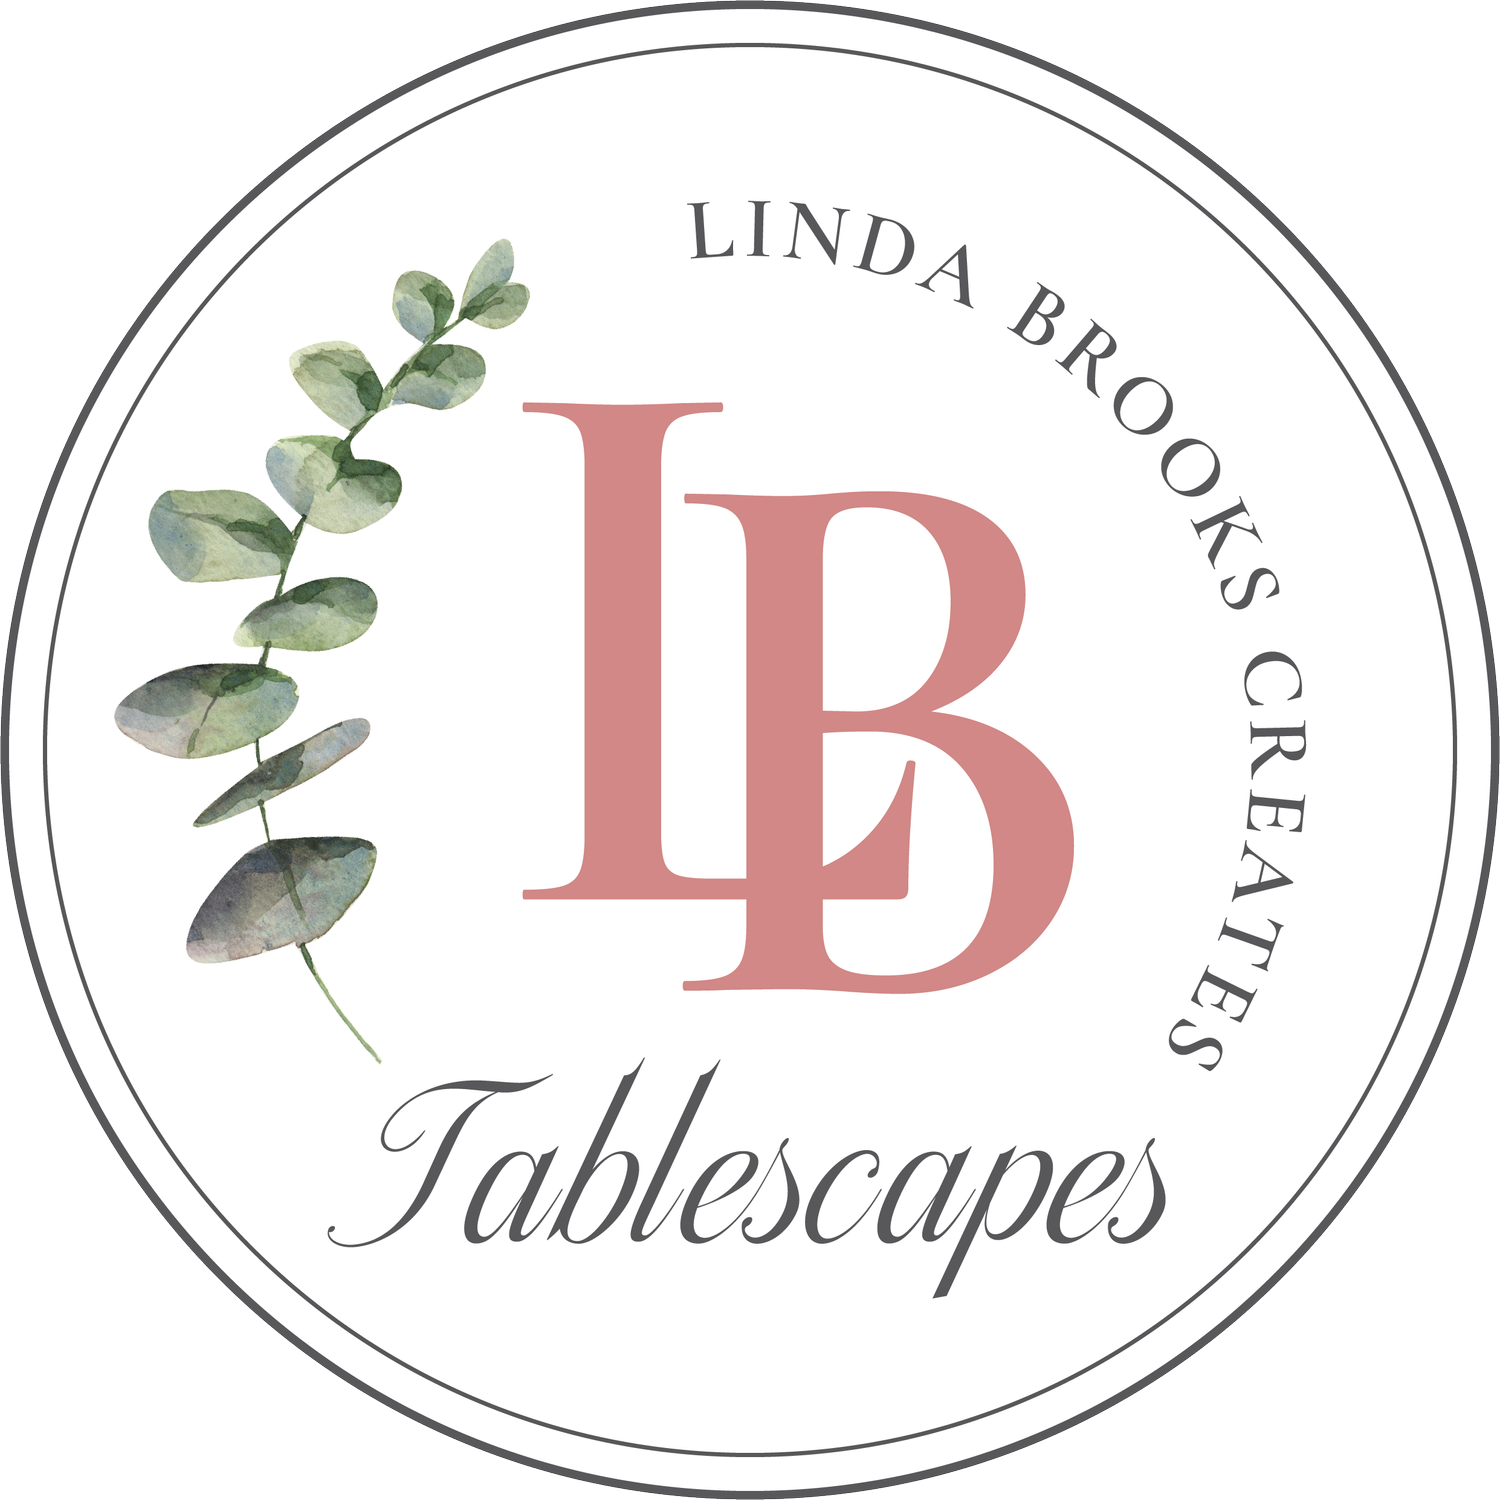 Linda Brooks Creates - Tablescapes